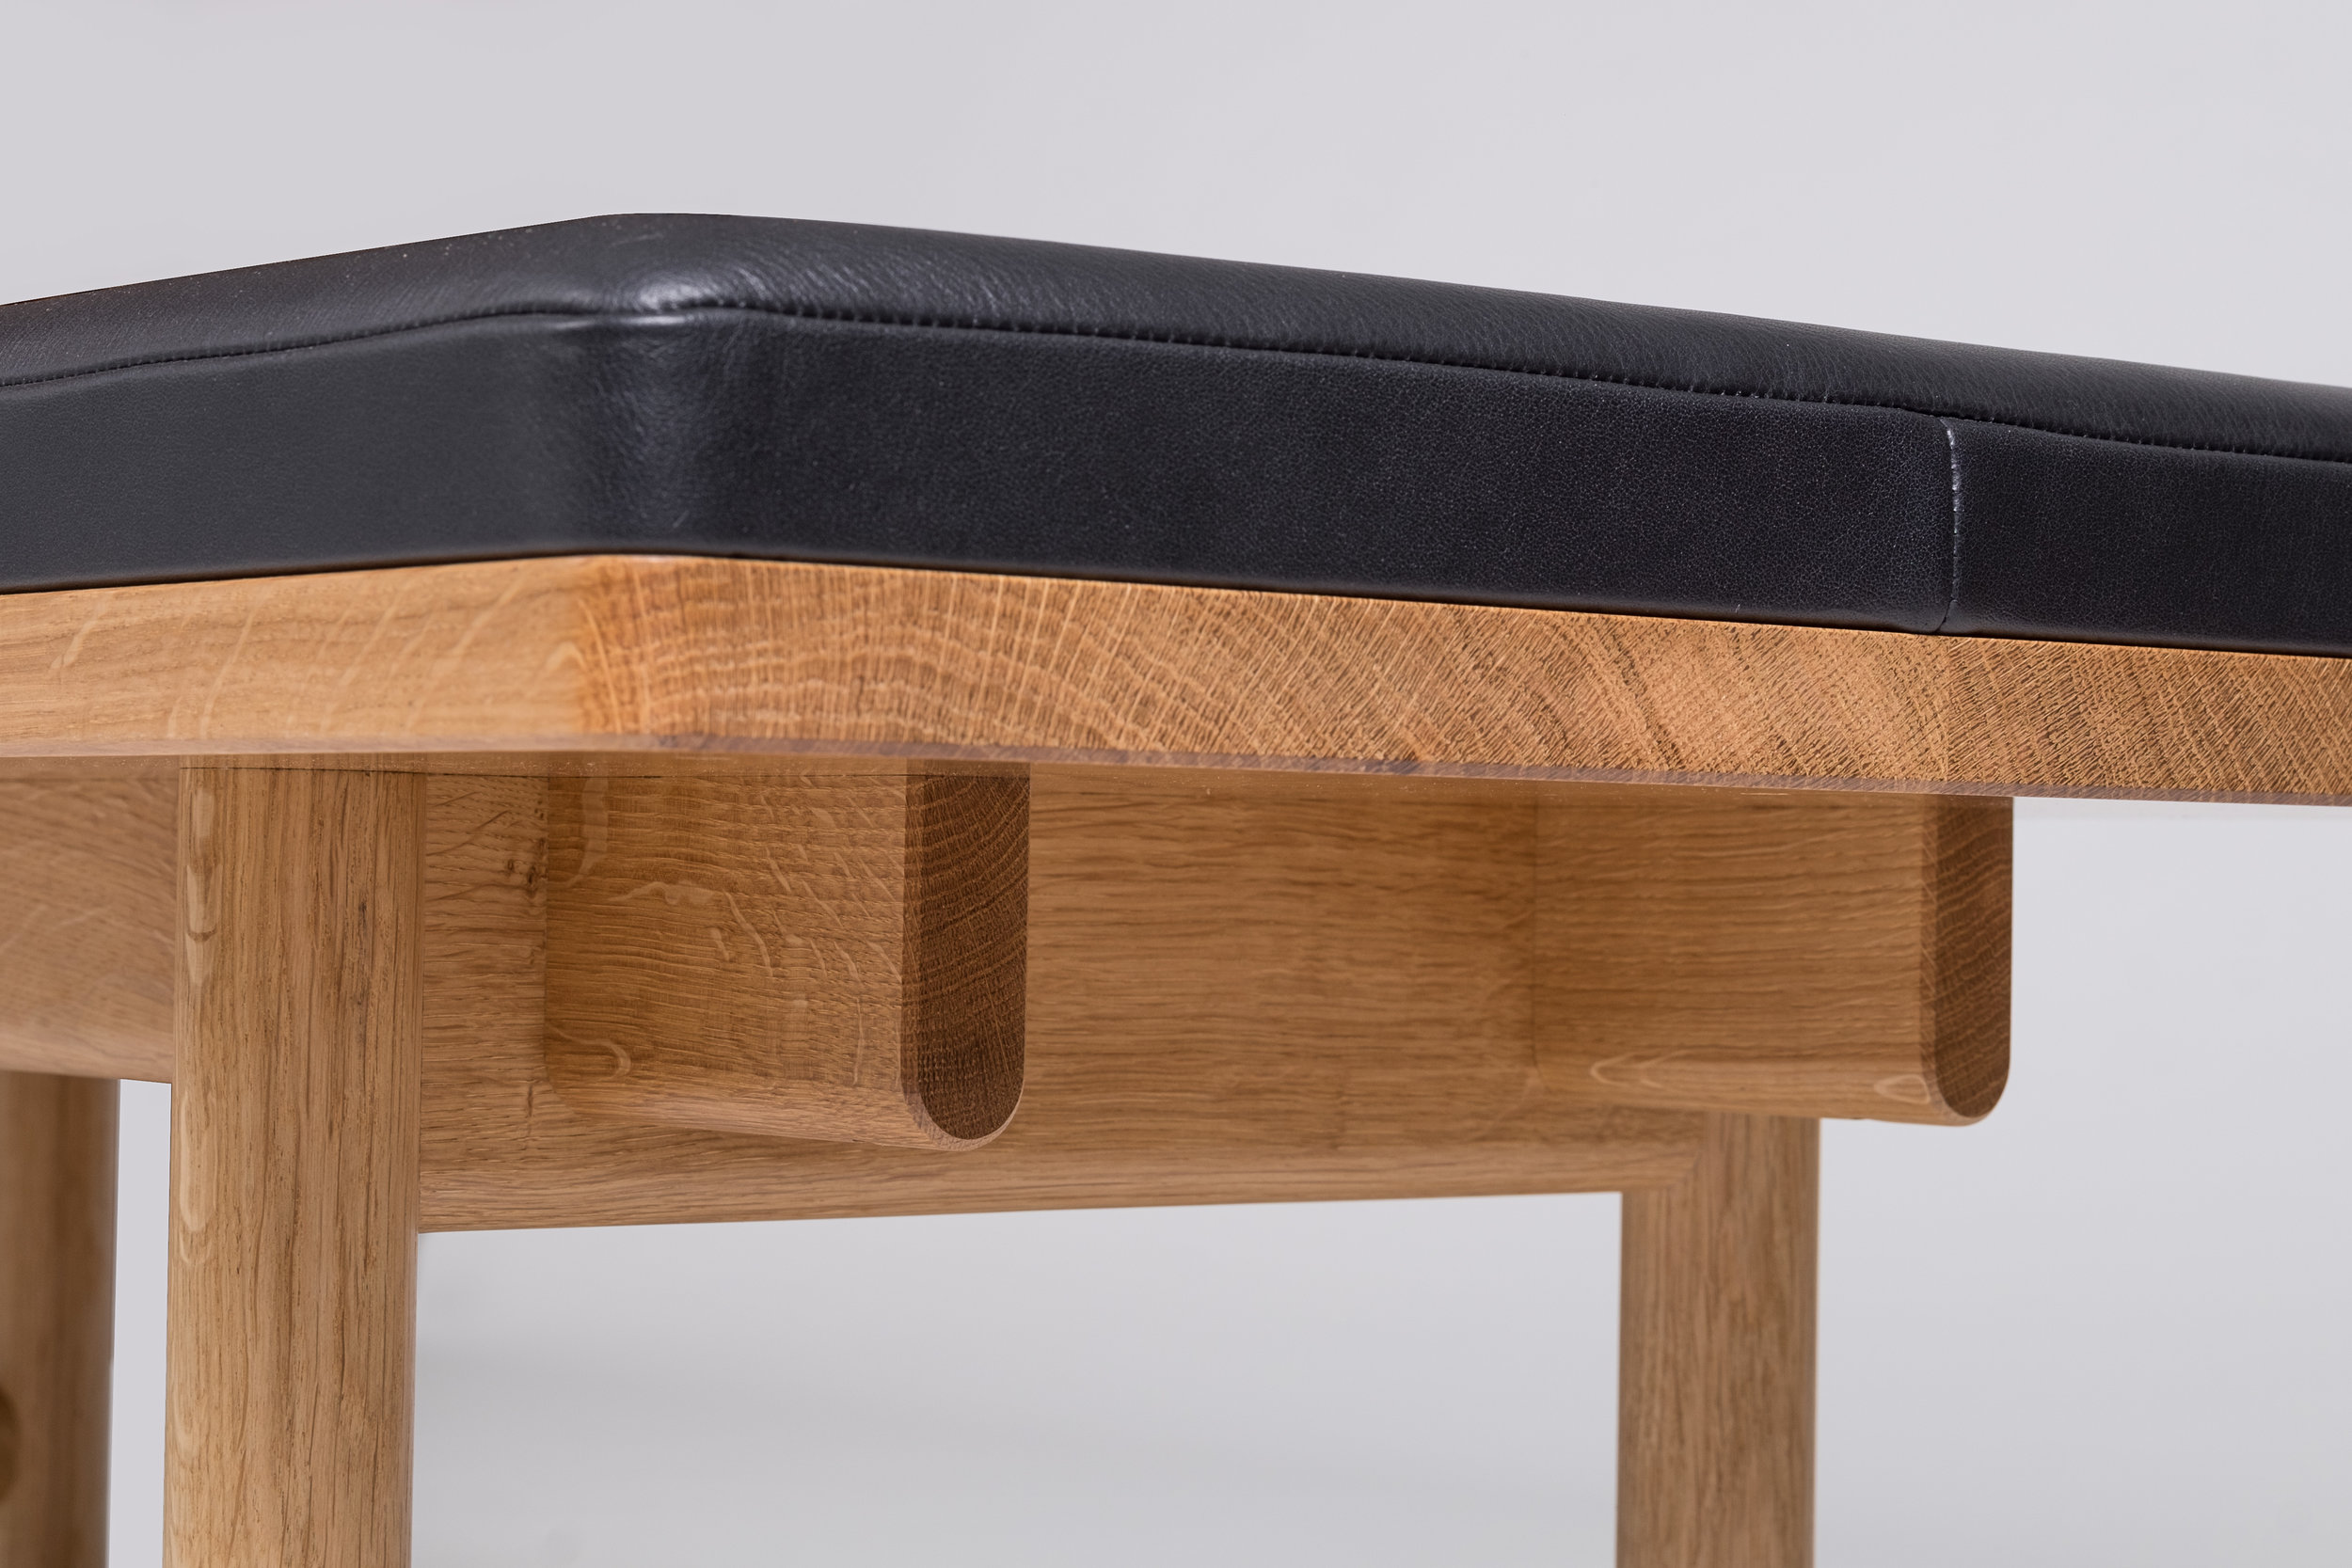 Handmade Oak and Swedish leather bench